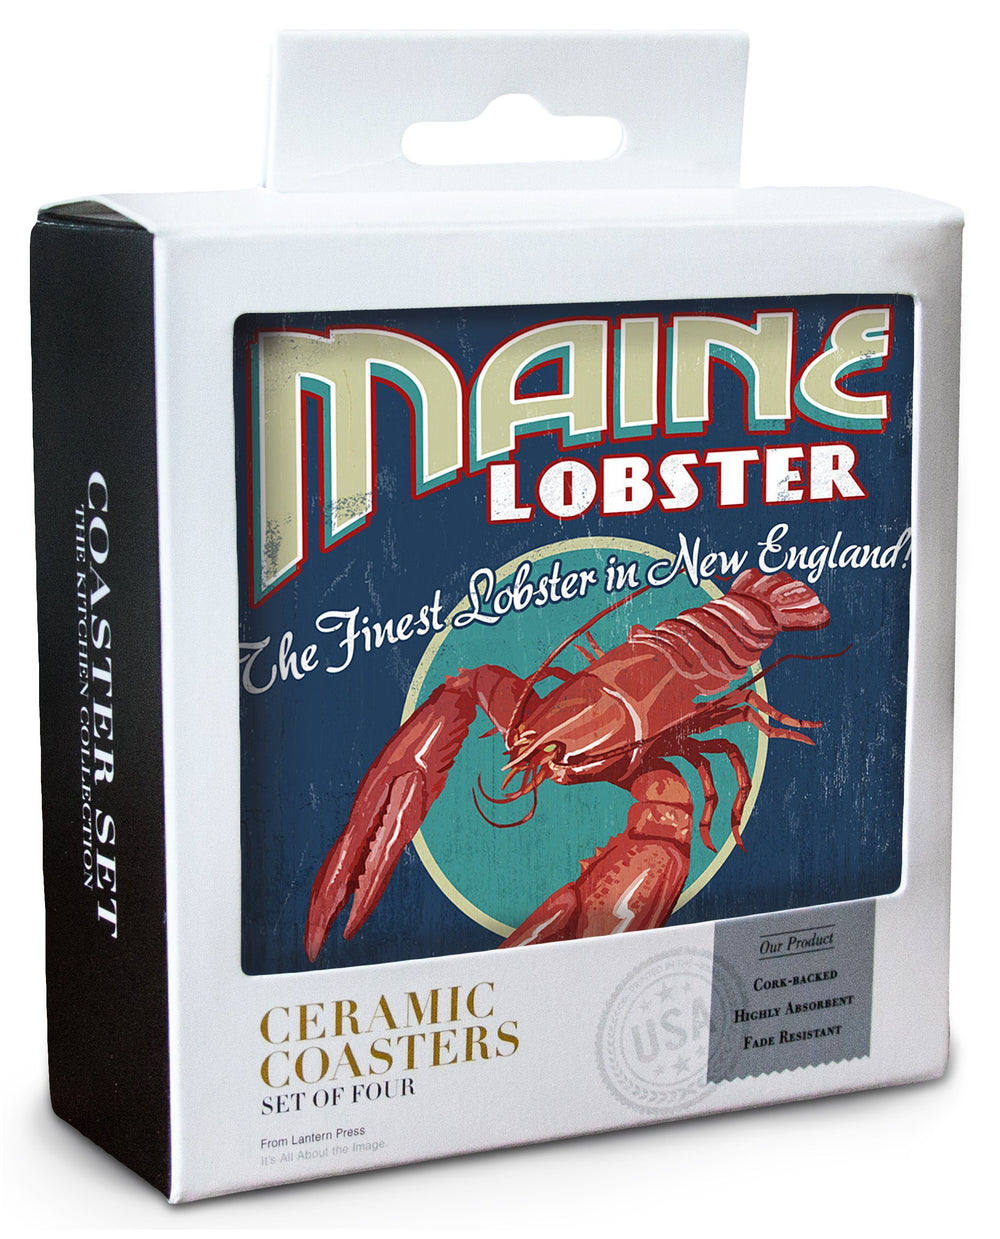 Maine, Lobster Vintage Sign, Lantern Press Artwork, Coaster Set Coasters Lantern Press 